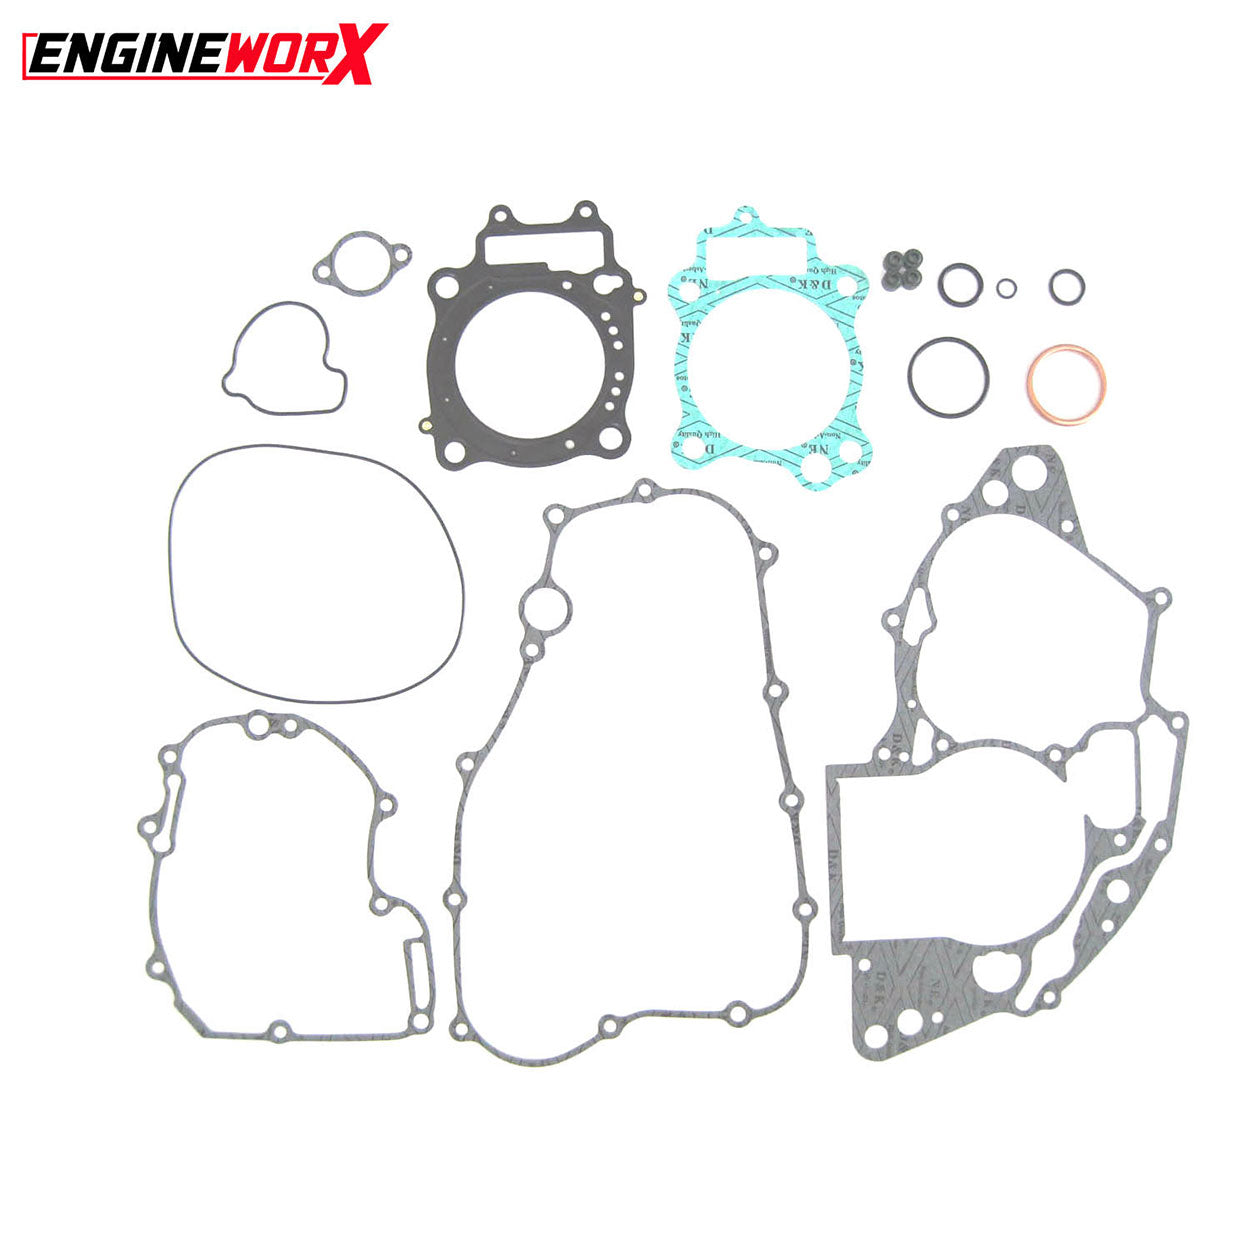 Engineworx Full Gasket Kit Honda CRF 250R 04-07, CRF 250X 04-16